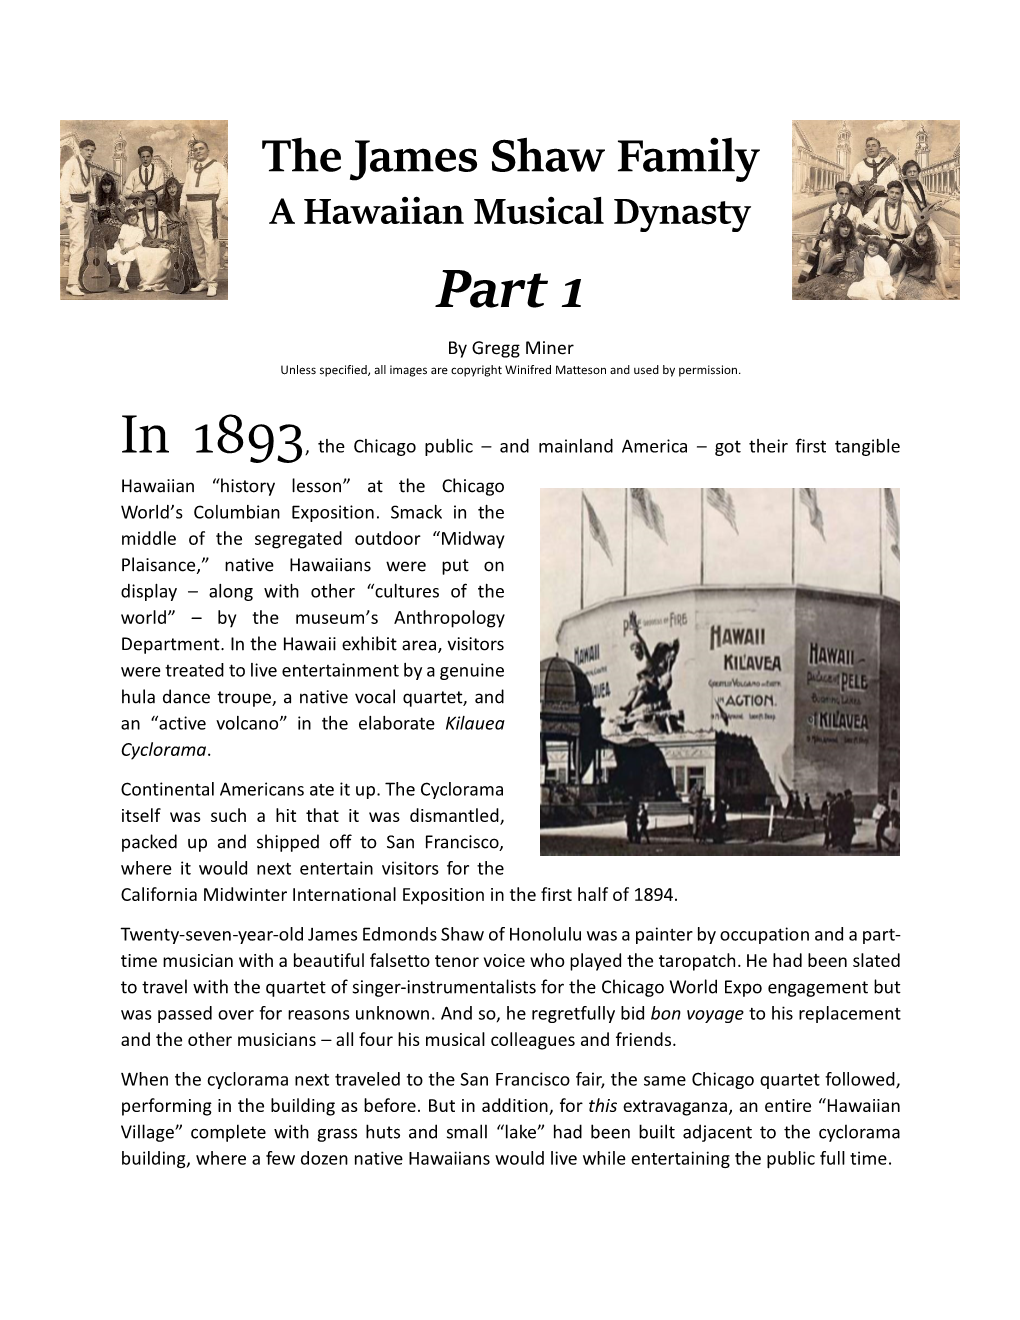 The James Shaw Family: a Hawaiian Musical Dynasty, Part 1